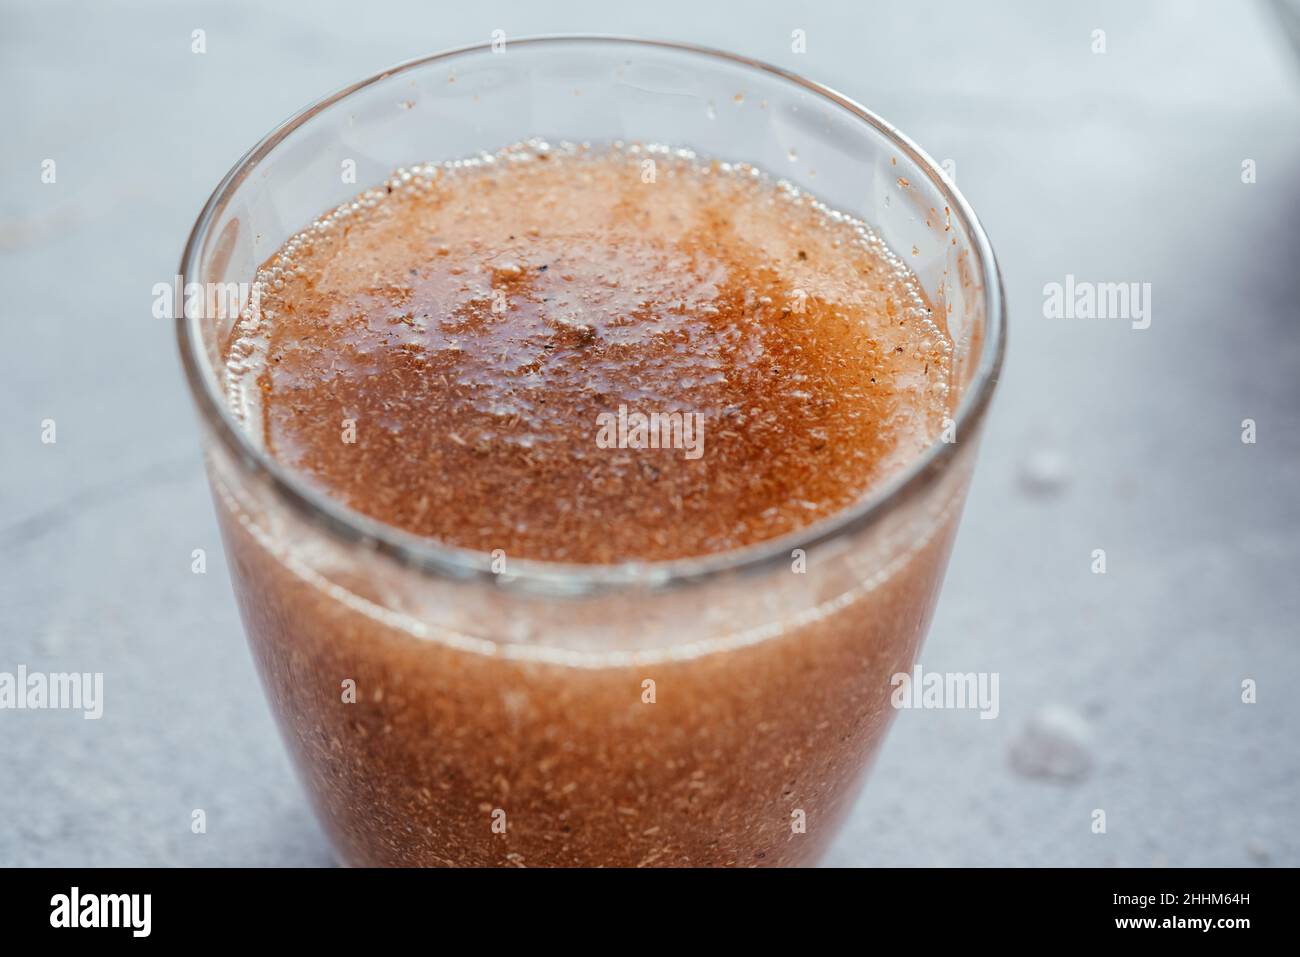 Un bicchiere di integratore di fibre alimentari solubile in acqua per la buccia di psyllium, dieta sana routine mattutina Foto Stock